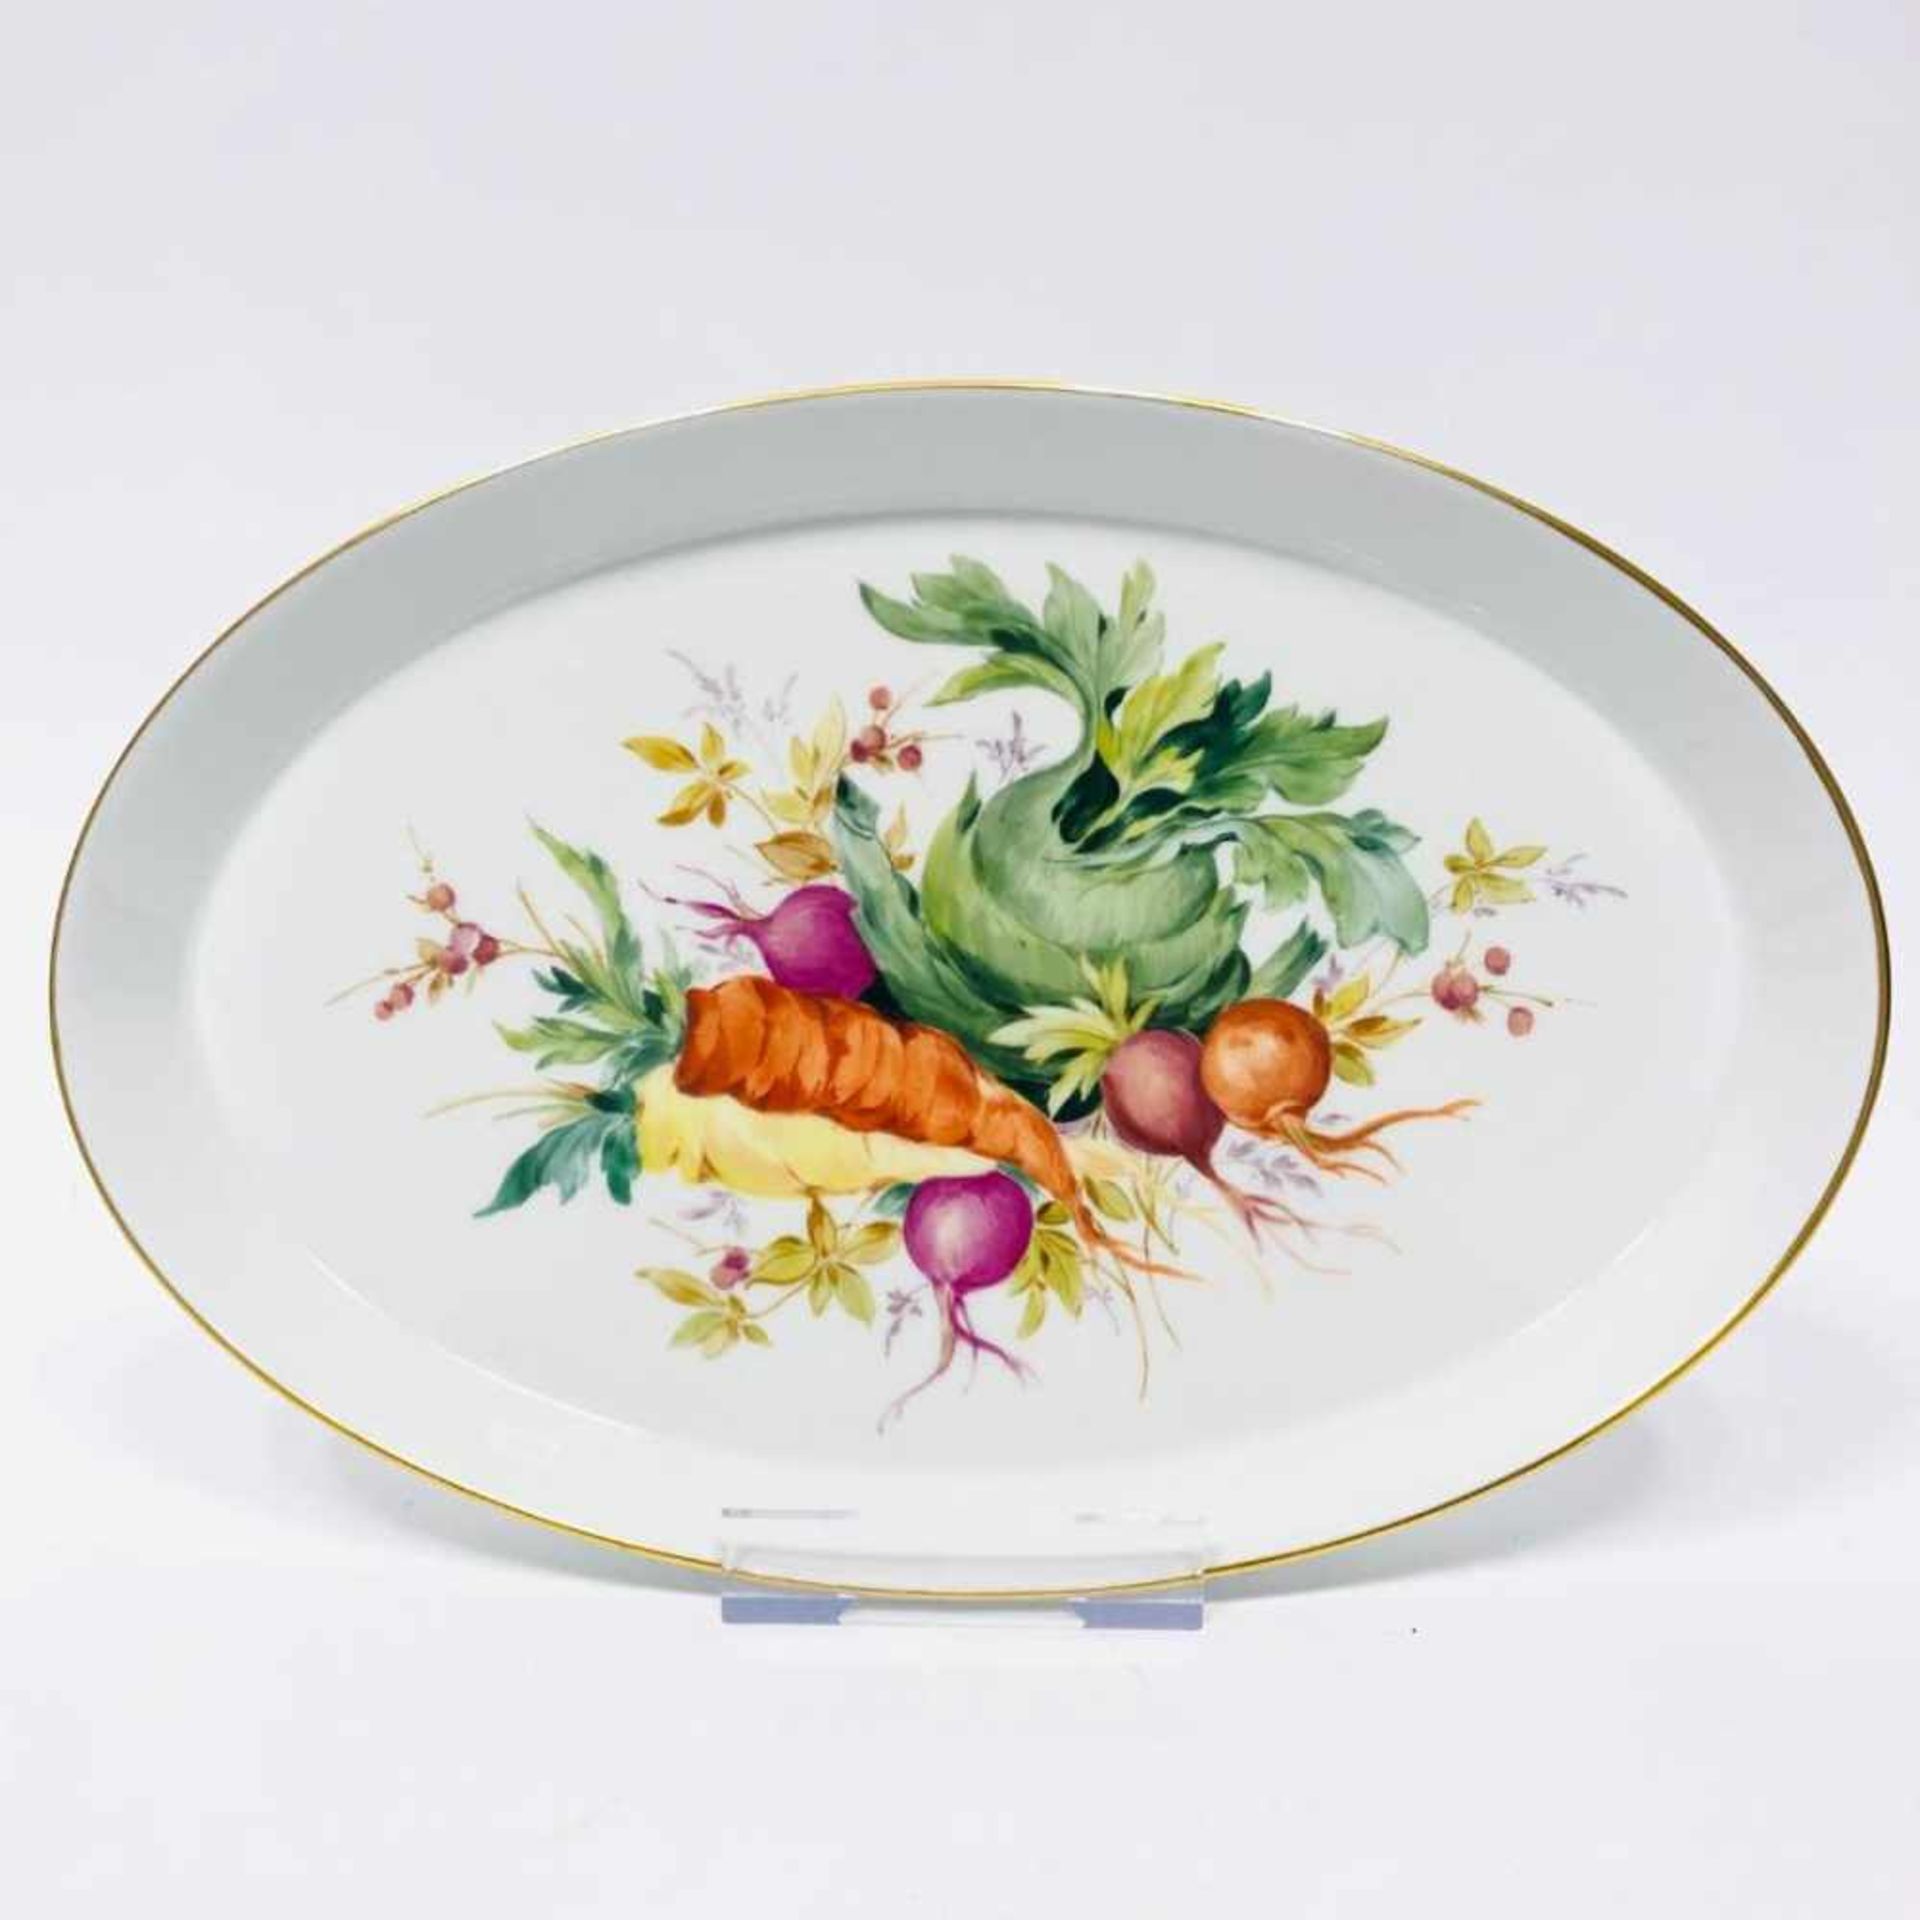 Ovale Platte: Meissen Porzellan, Entwurf Paul Börner, Dekor Gemüse-Malerei, Gold-Rand, sehr gut.